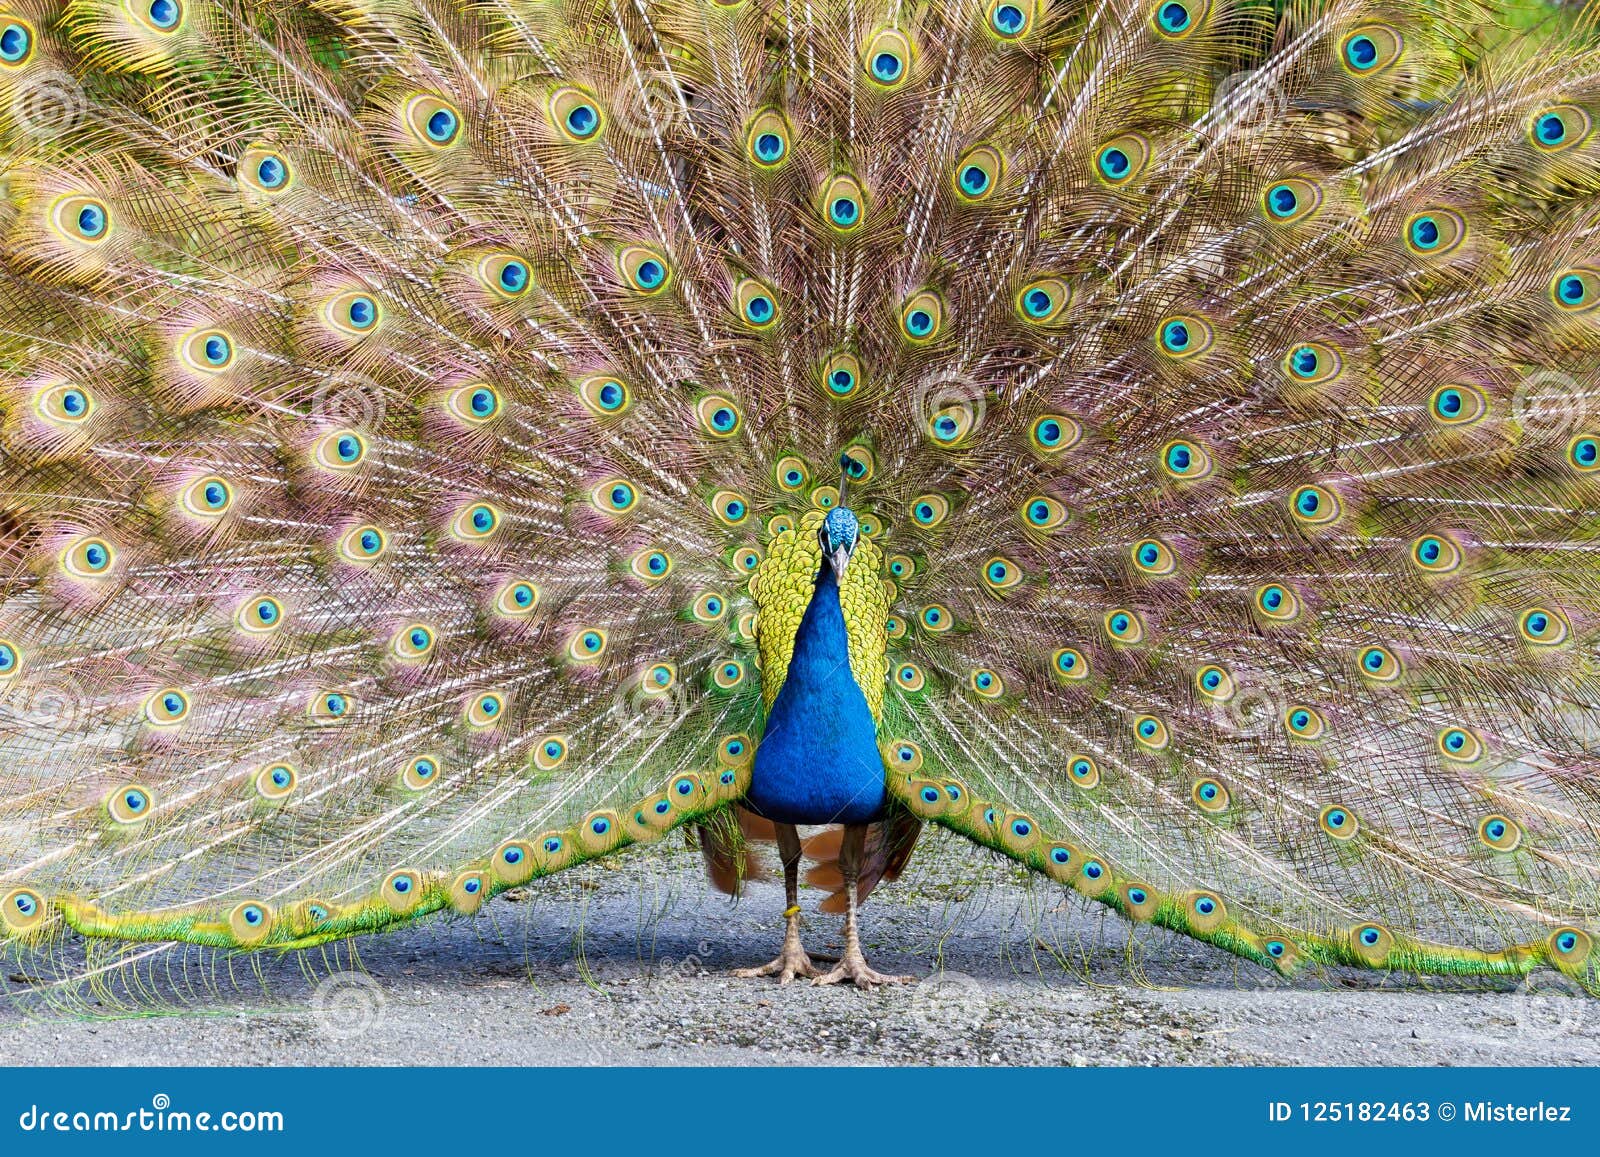 peacock displaying plumage